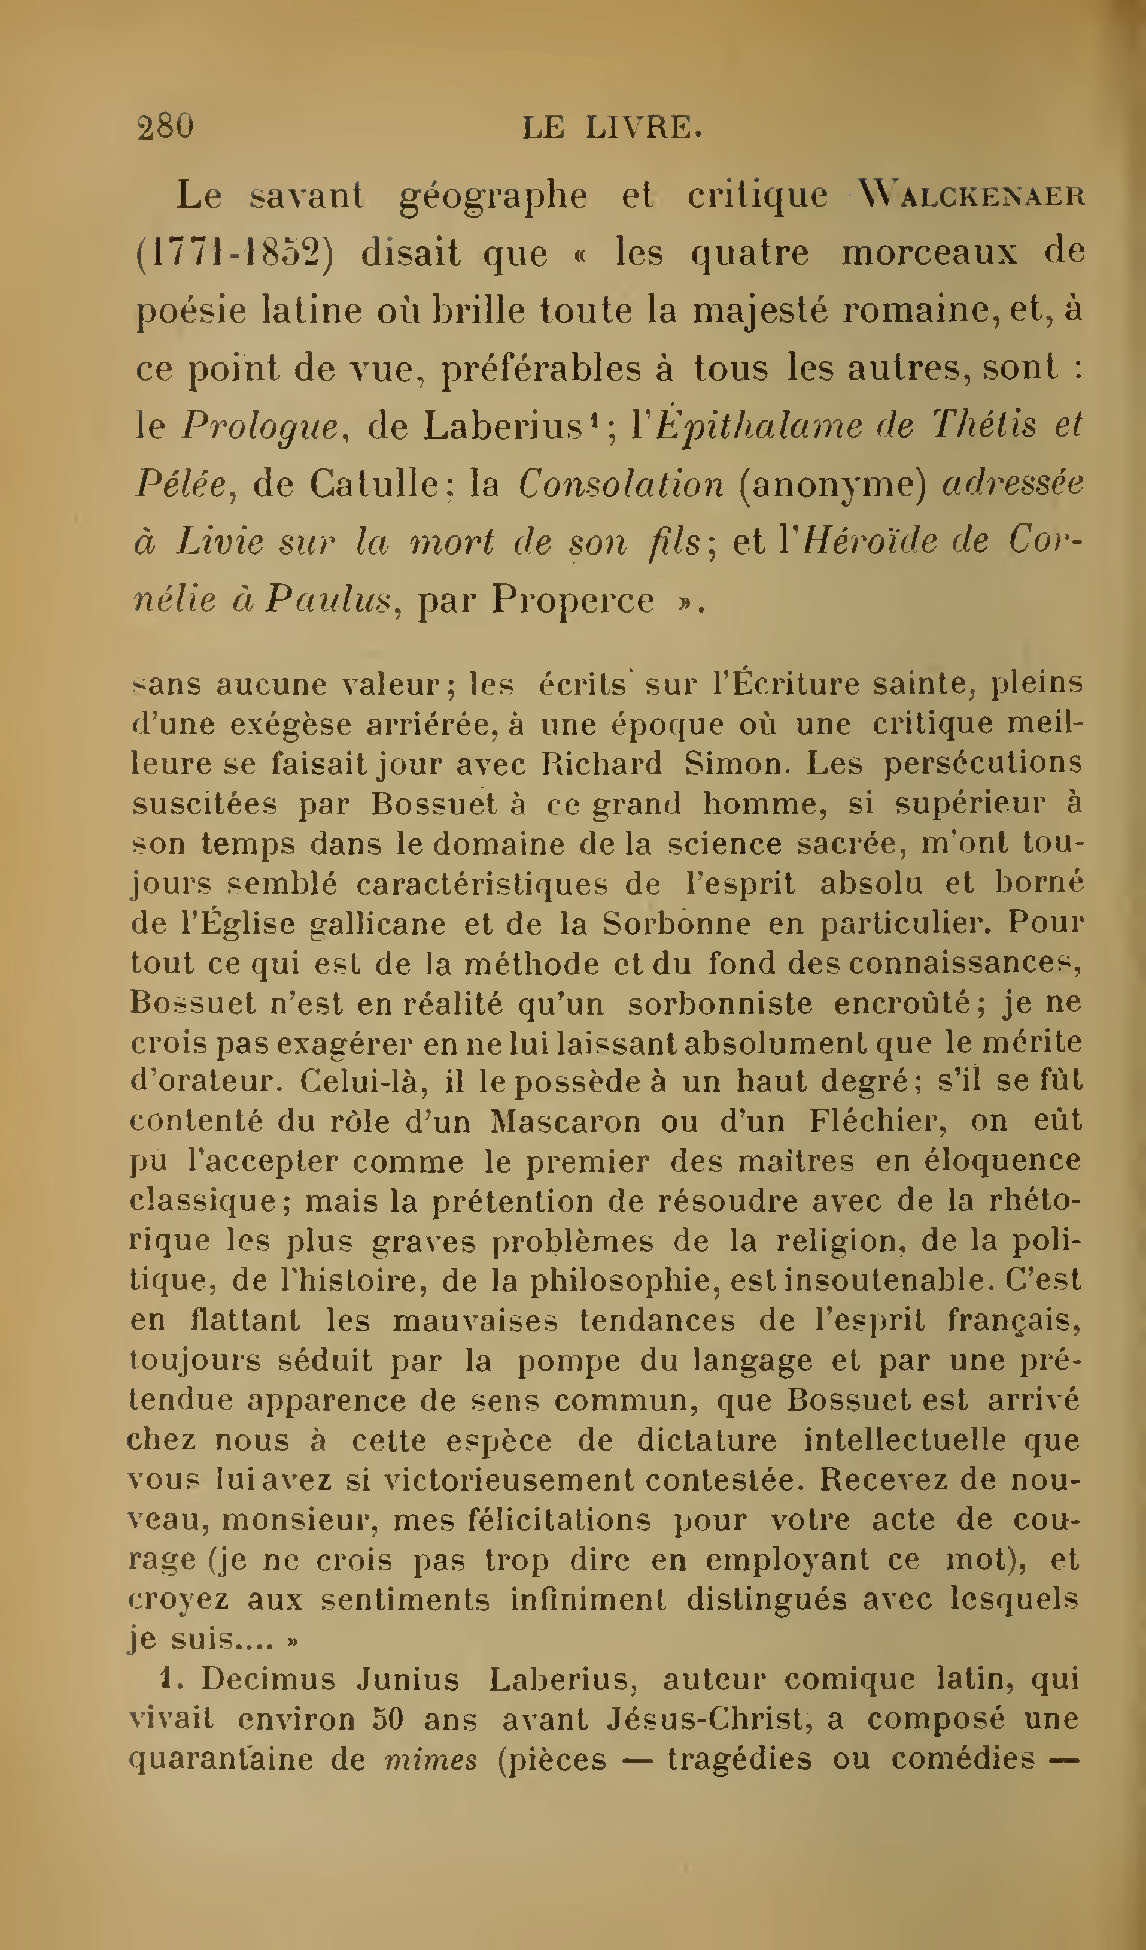 Albert Cim, Le Livre, t. I, p. 280.